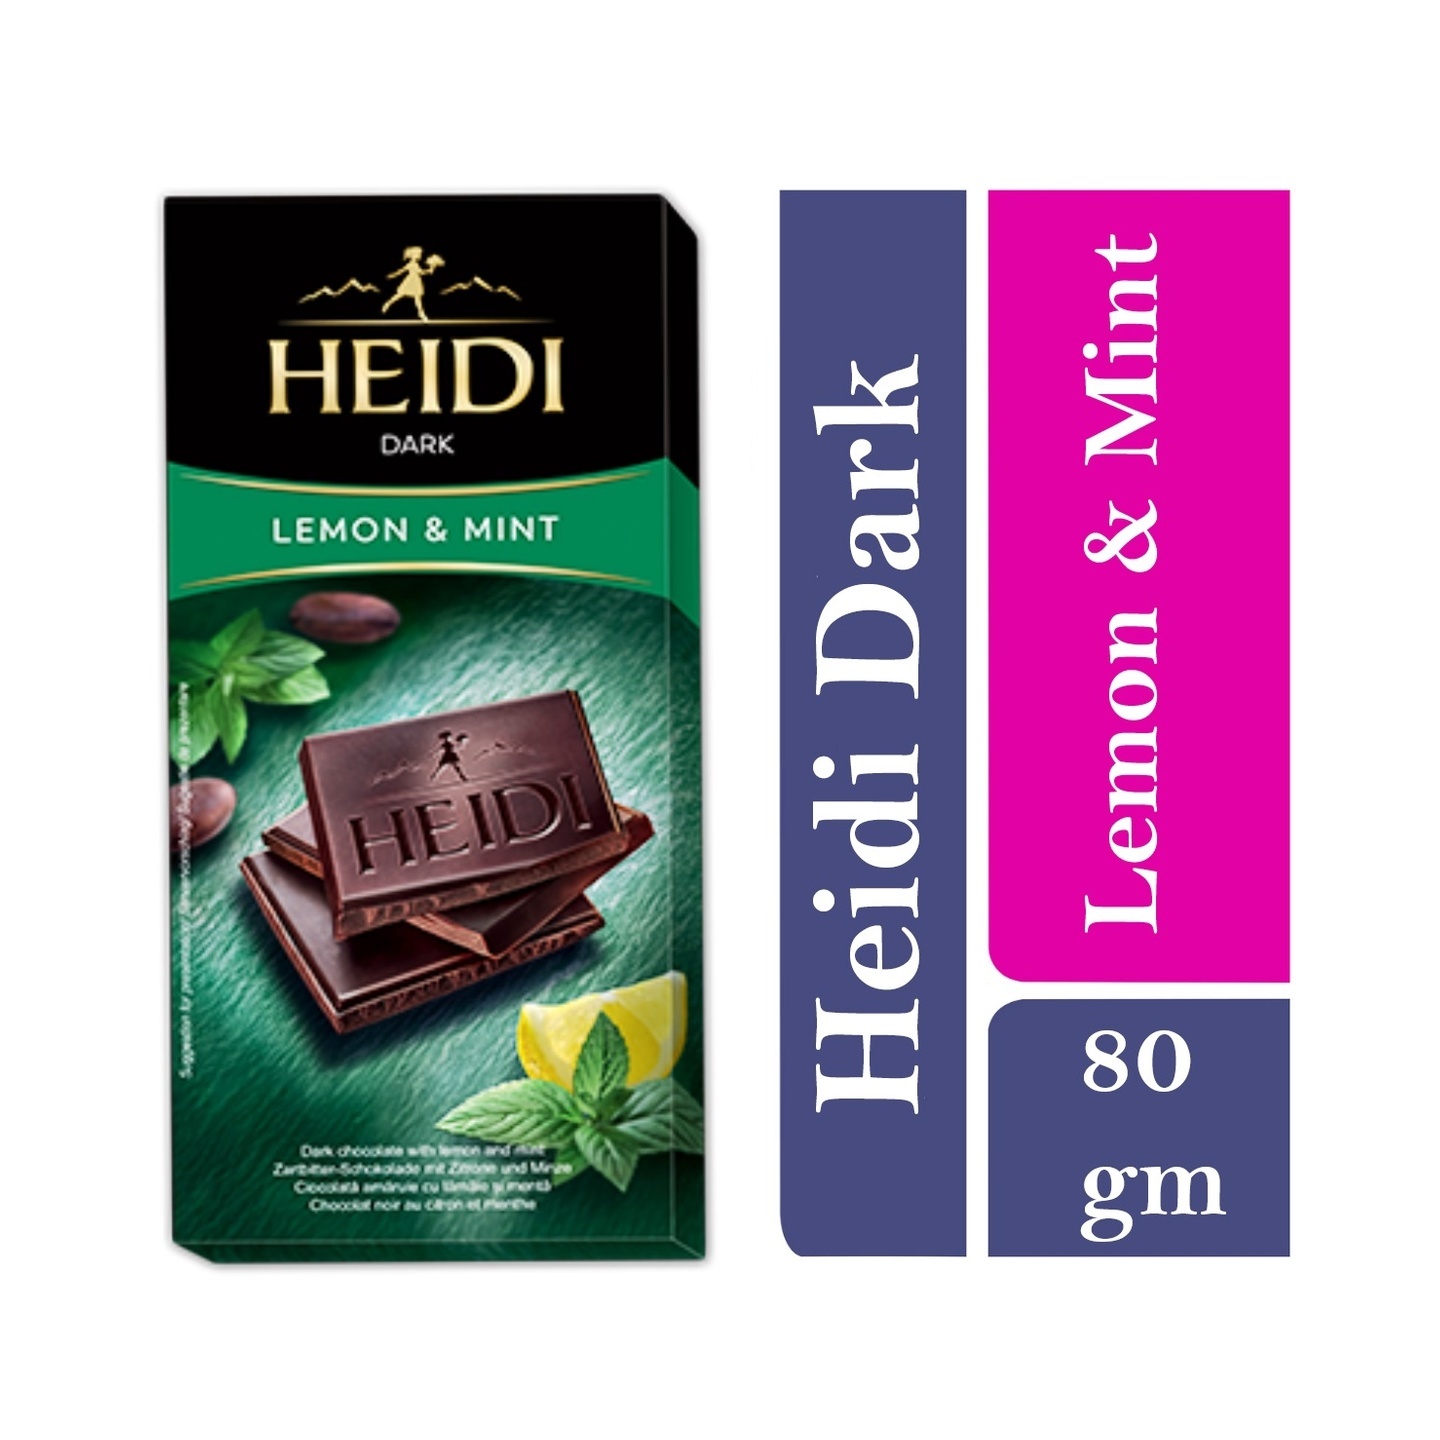 Heidi Dark Chocolate with mint and a hint of lemon 1 x 80gm